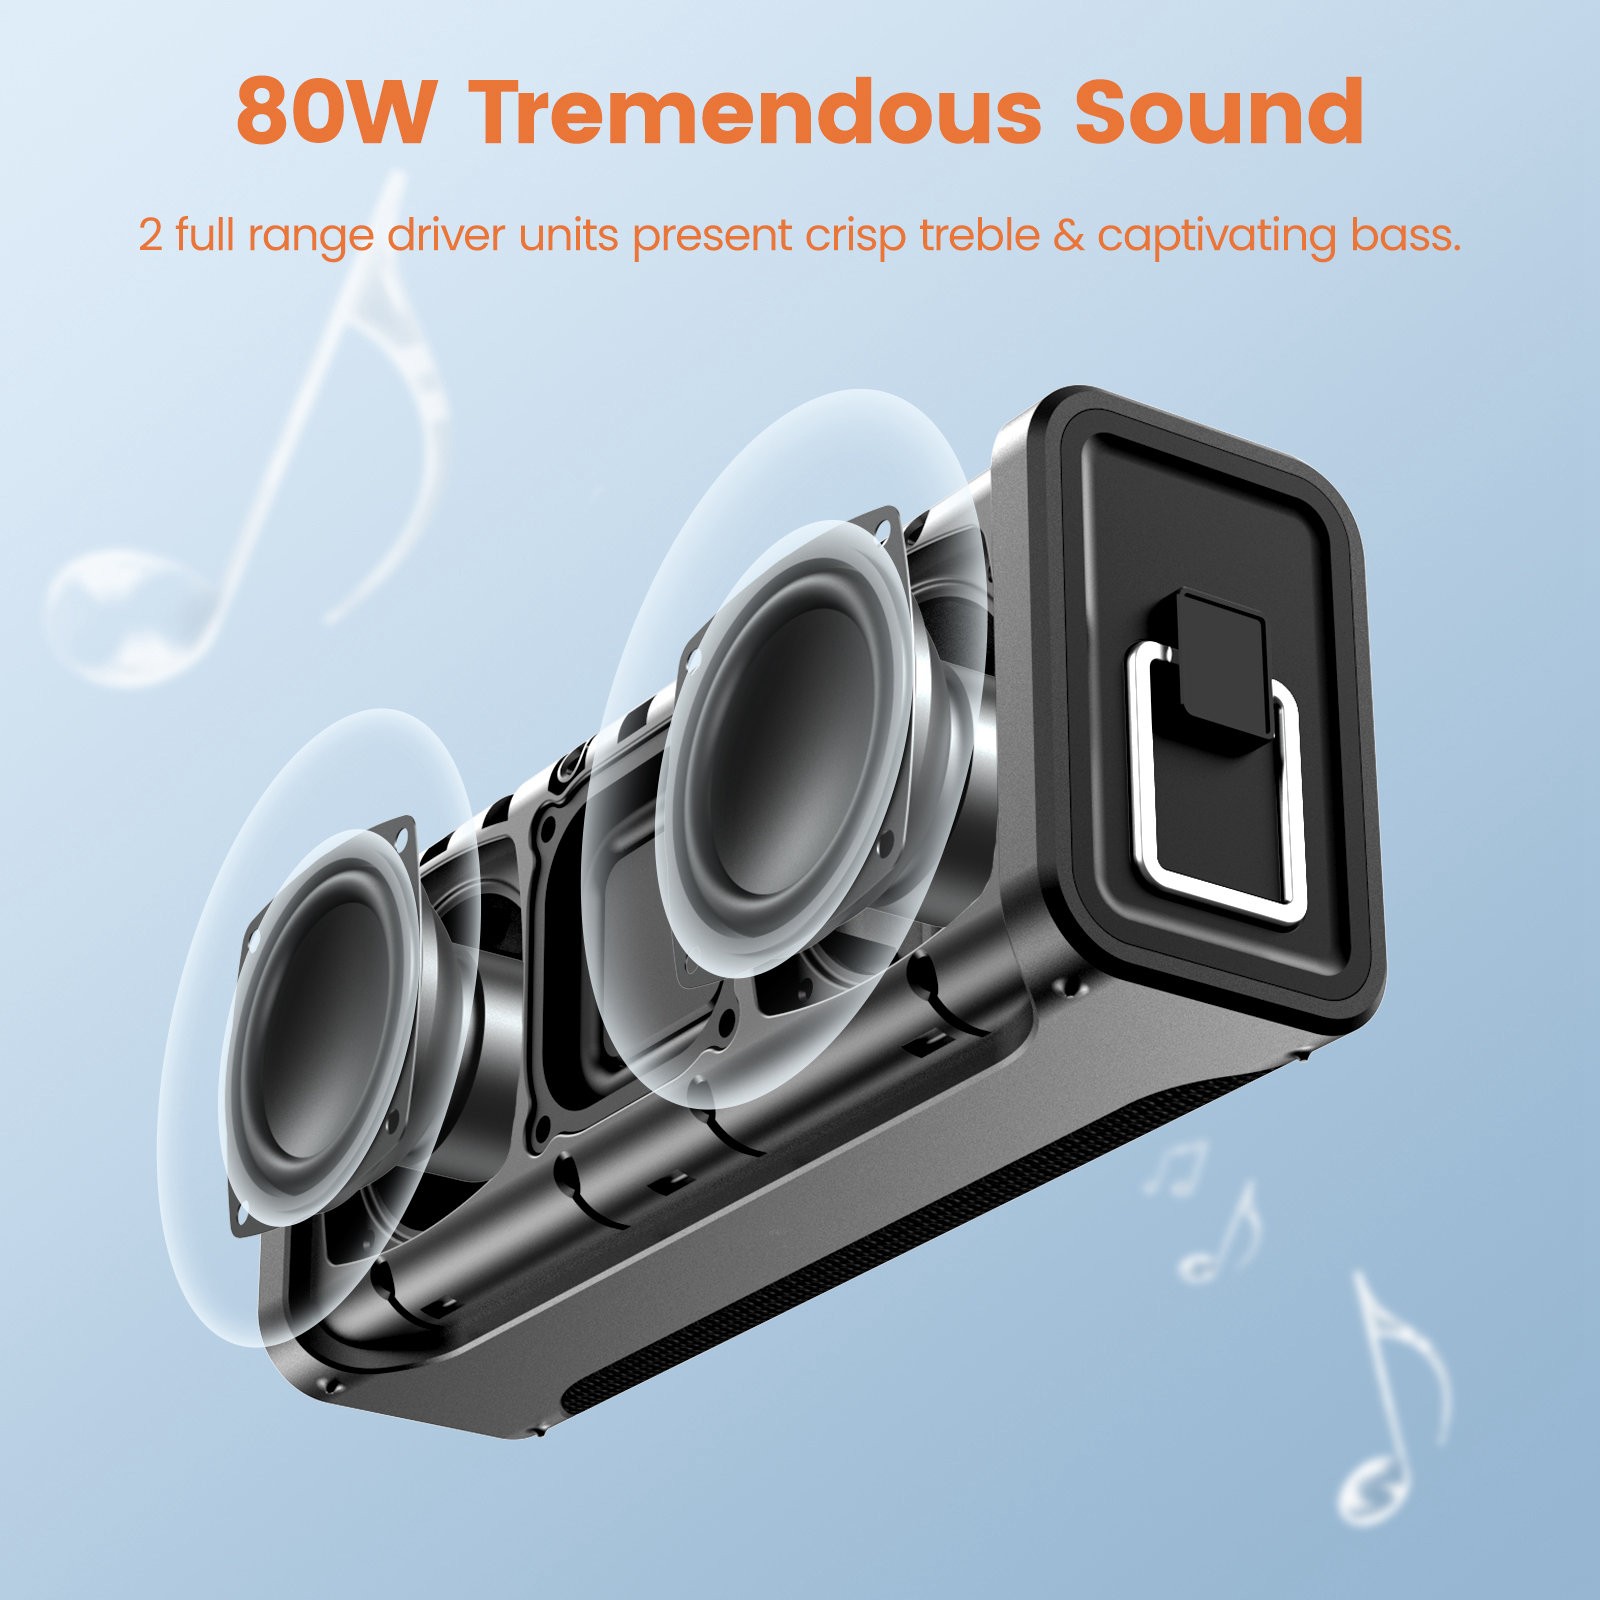 SOUNARC M1 80W IPX6 Dual Microphone Bluetooth Speaker